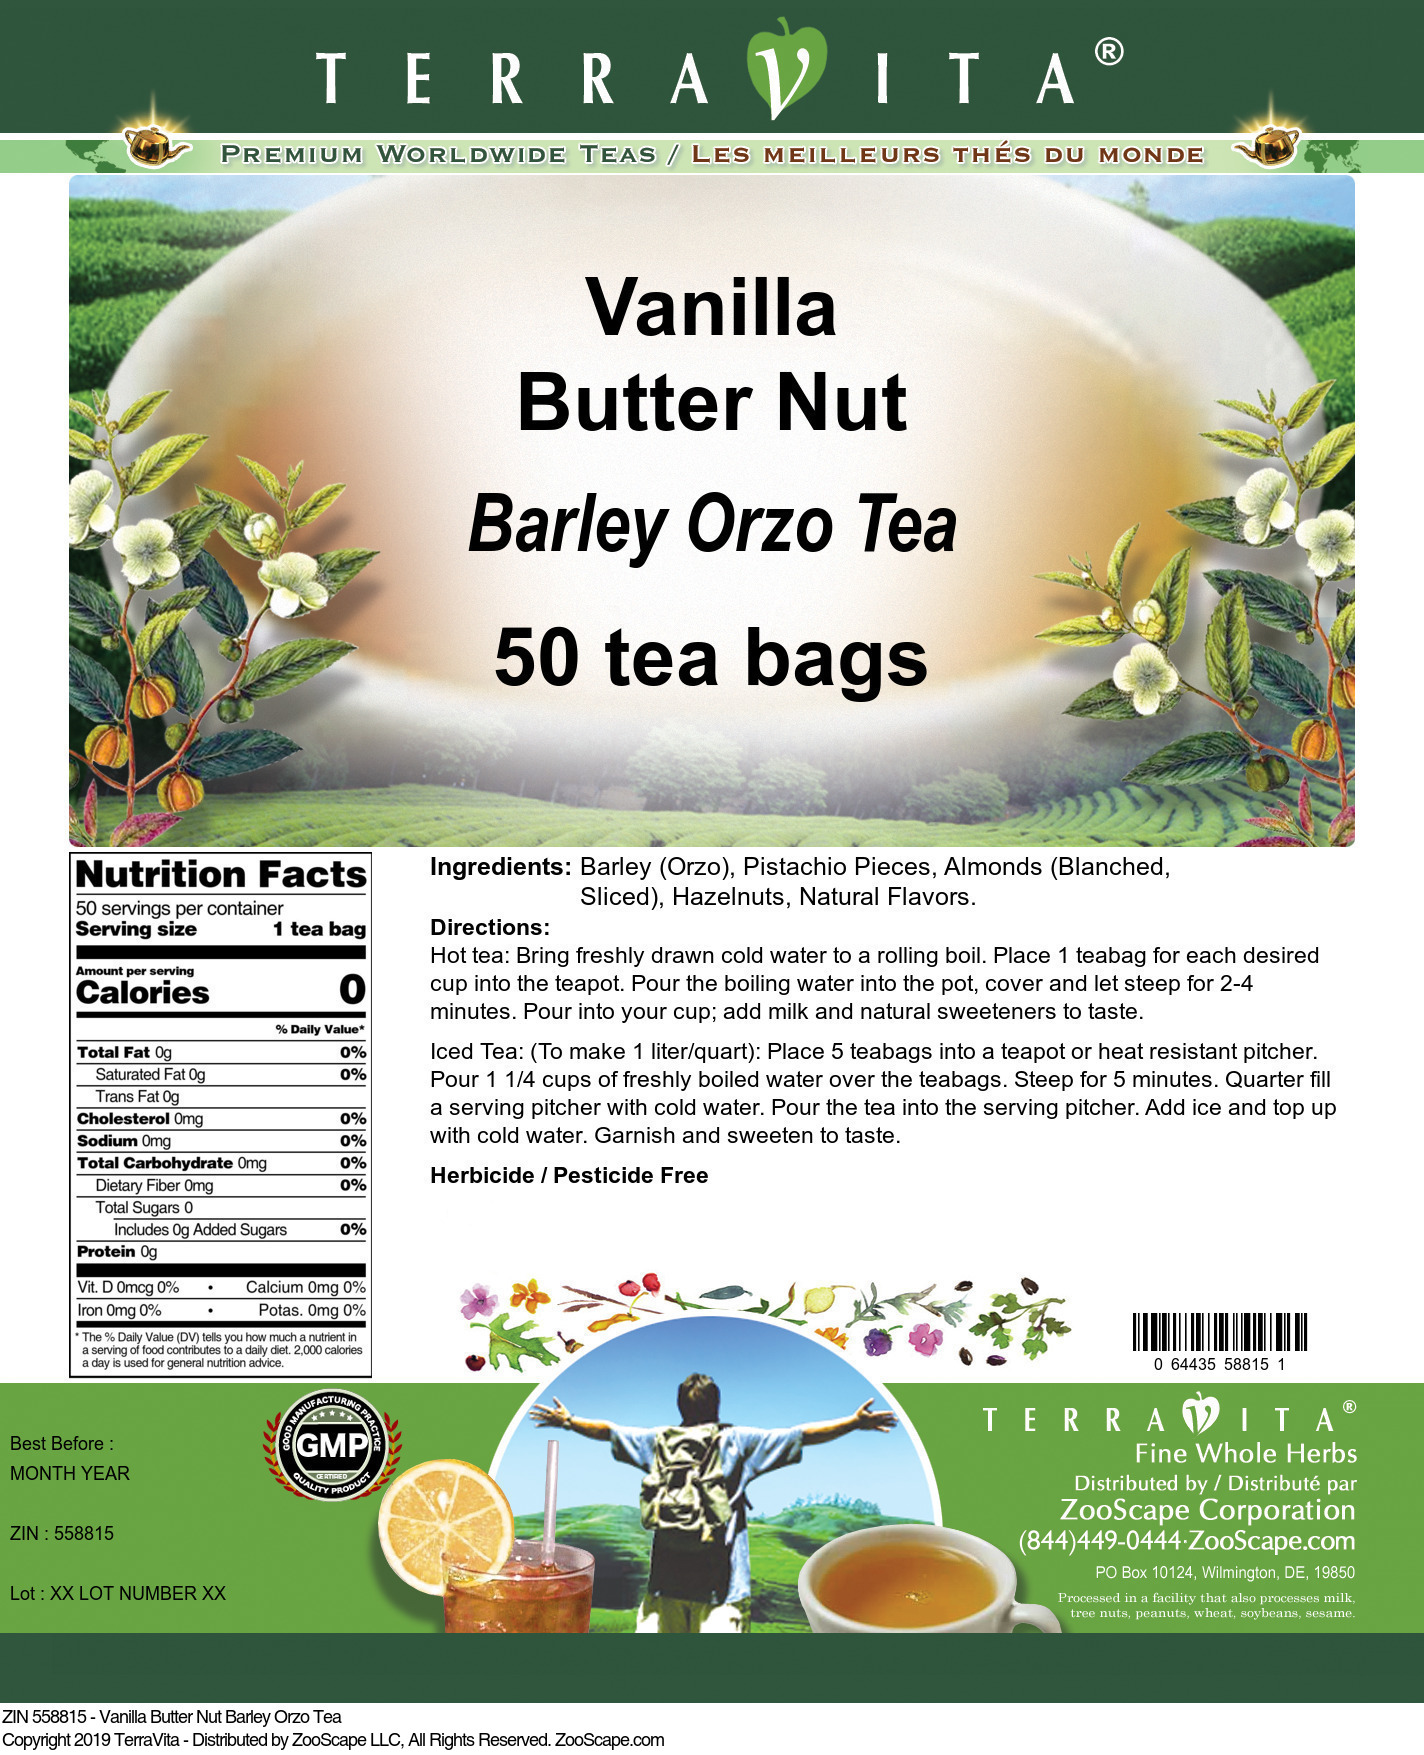 Vanilla Butter Nut Barley Orzo Tea - Label